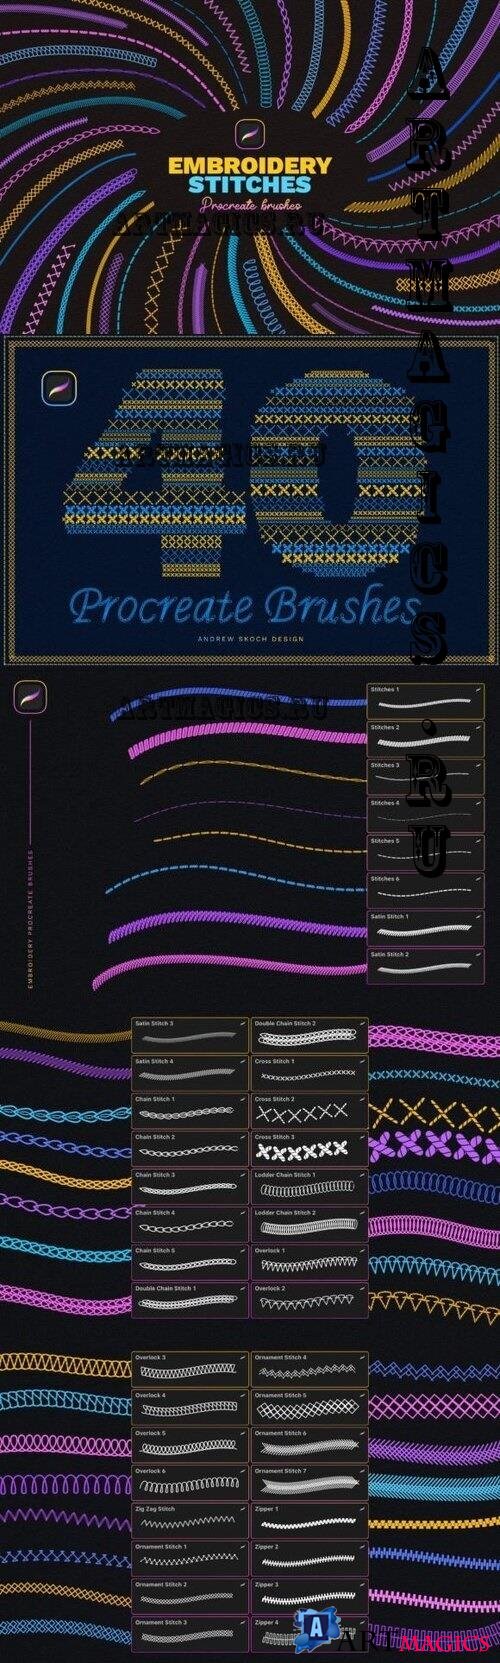 Embroidery Stitches Procreate Brush - 10265115